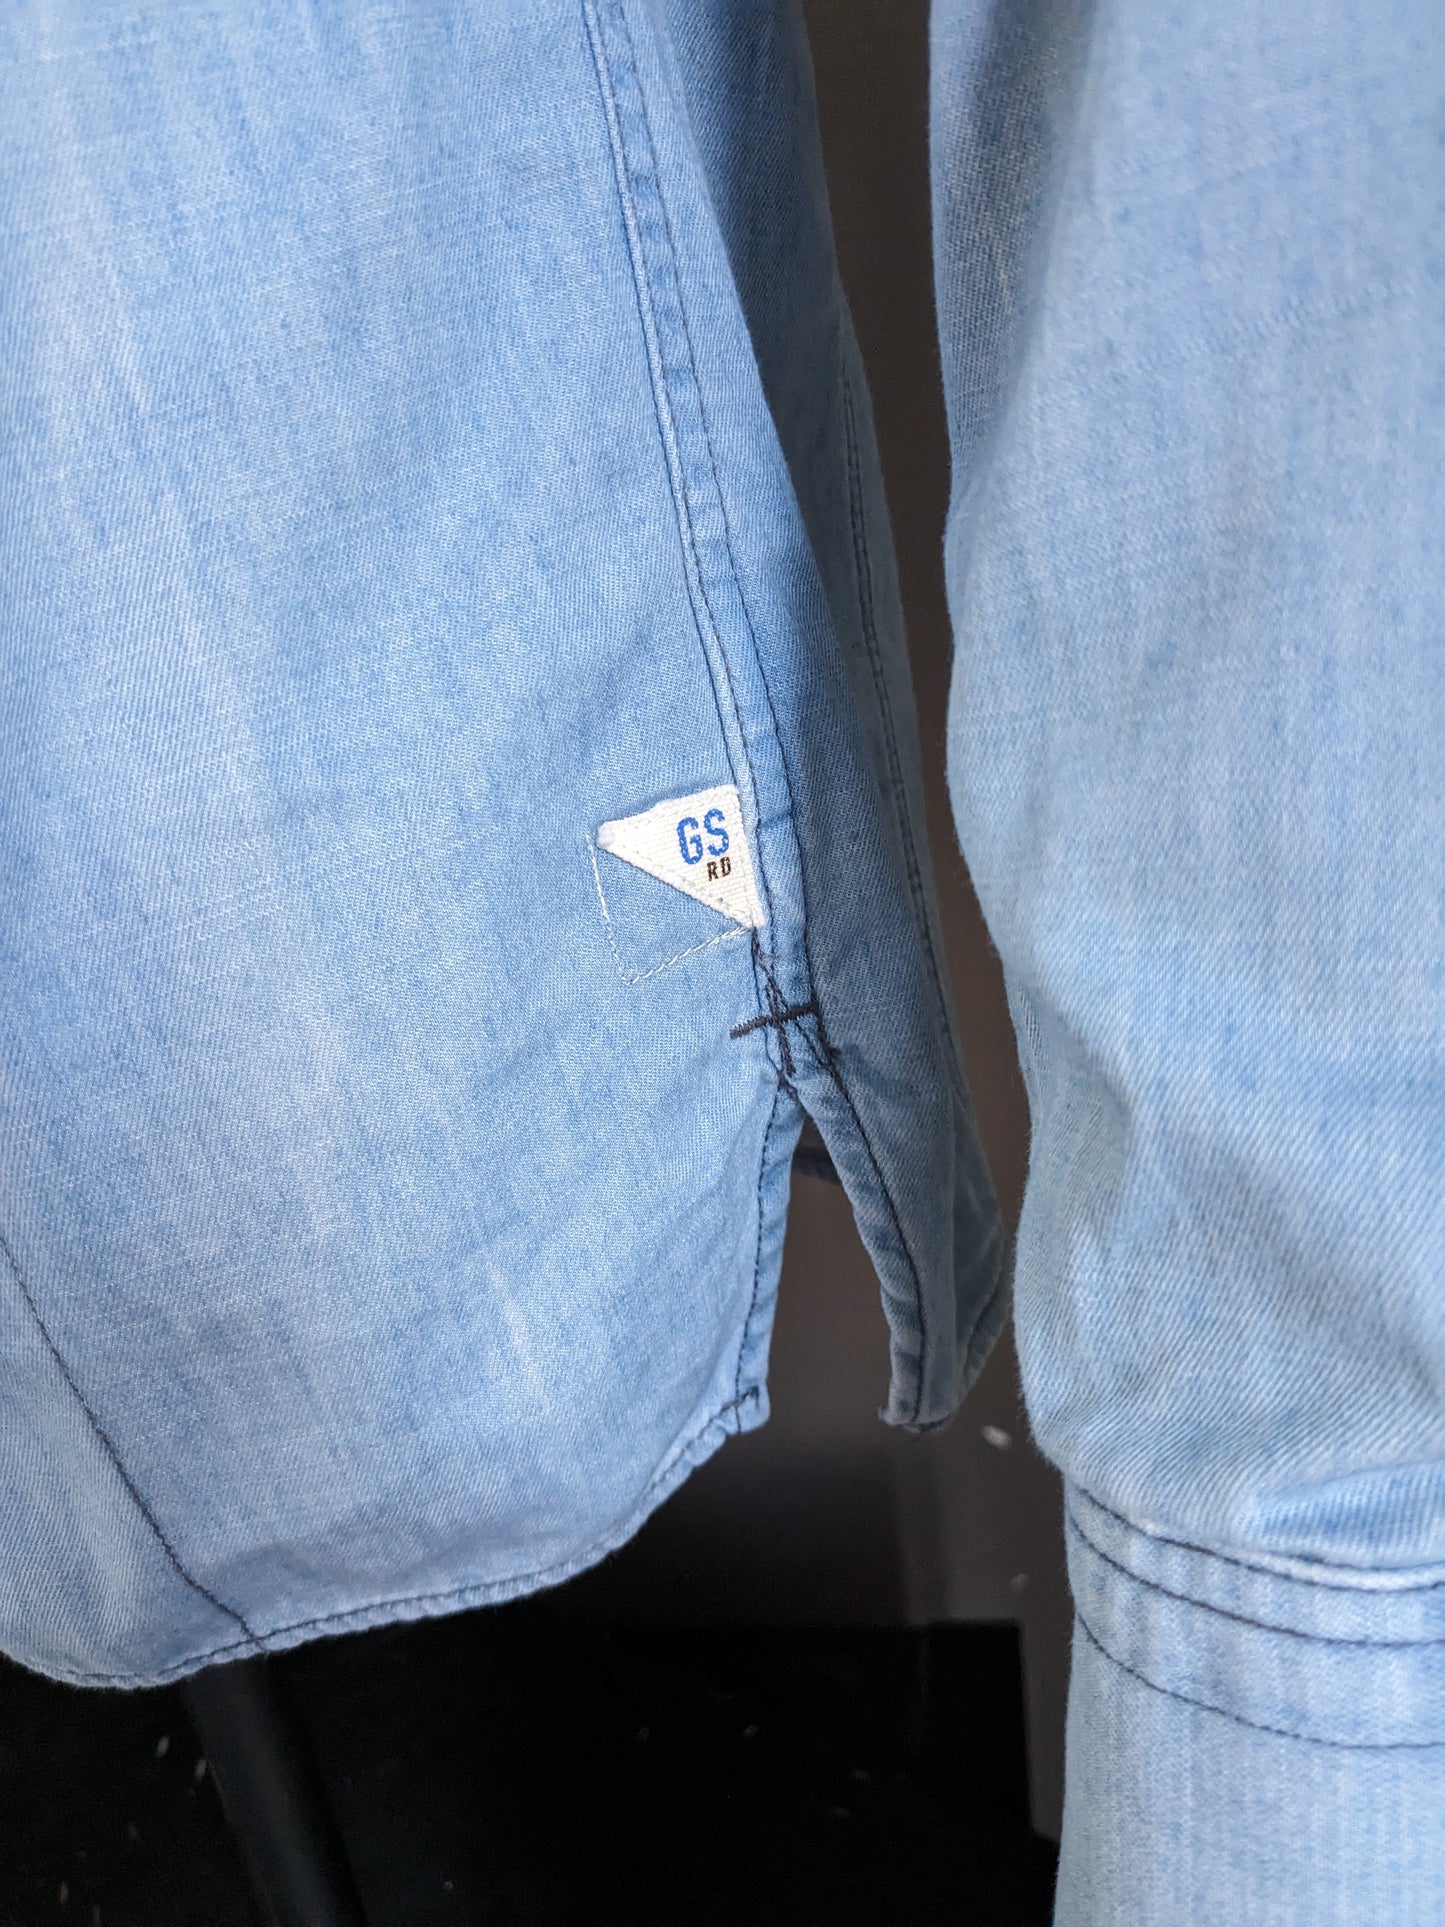 Camisa G-Star Raw Jeans. Color azul claro. Tamaño S.